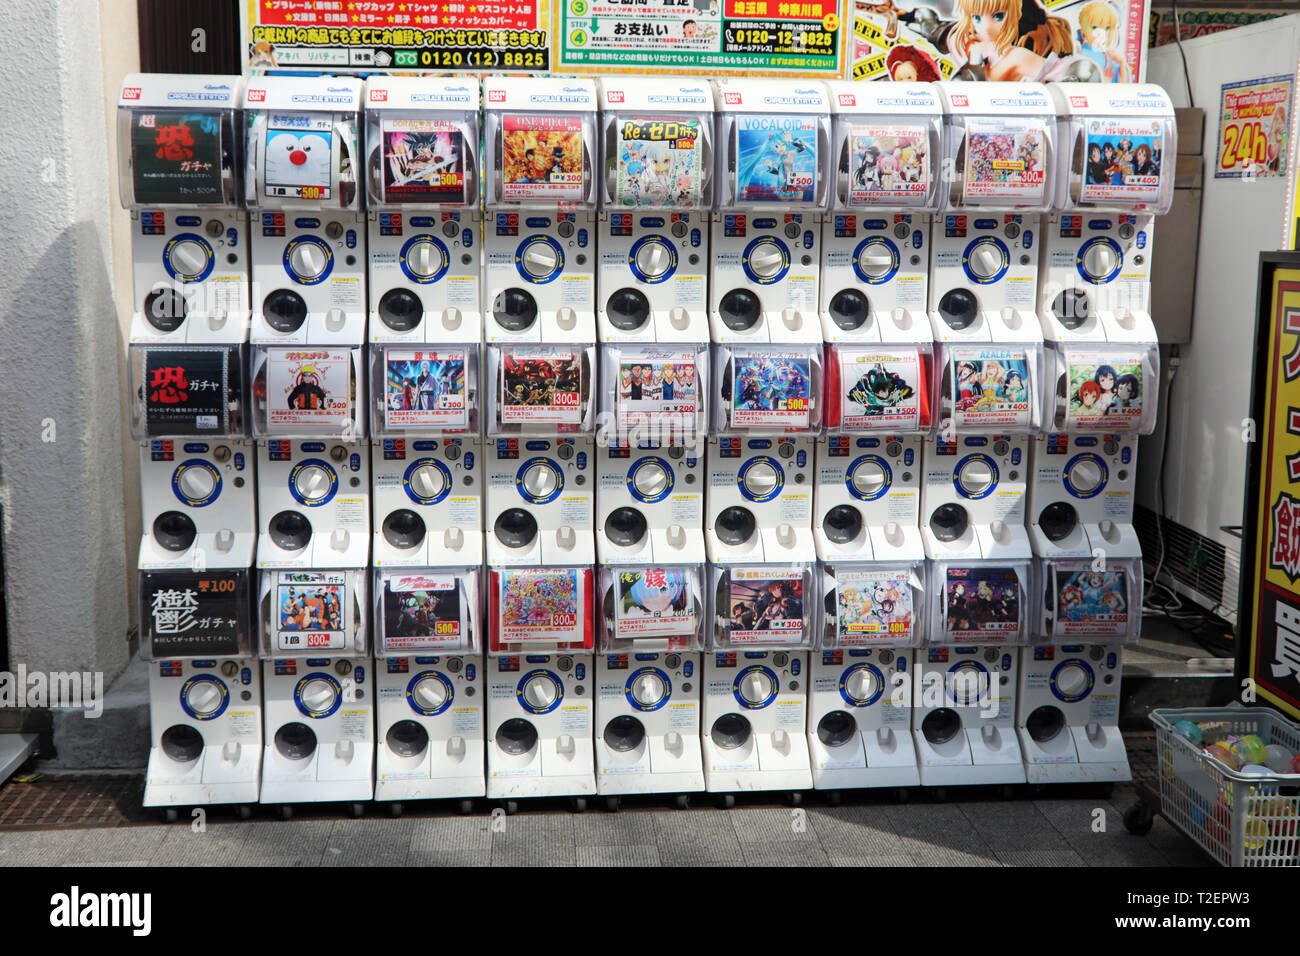 Capsule toy vending machines in the street in Akihabara Electric Town, Tokyo, Japan Stock Photo